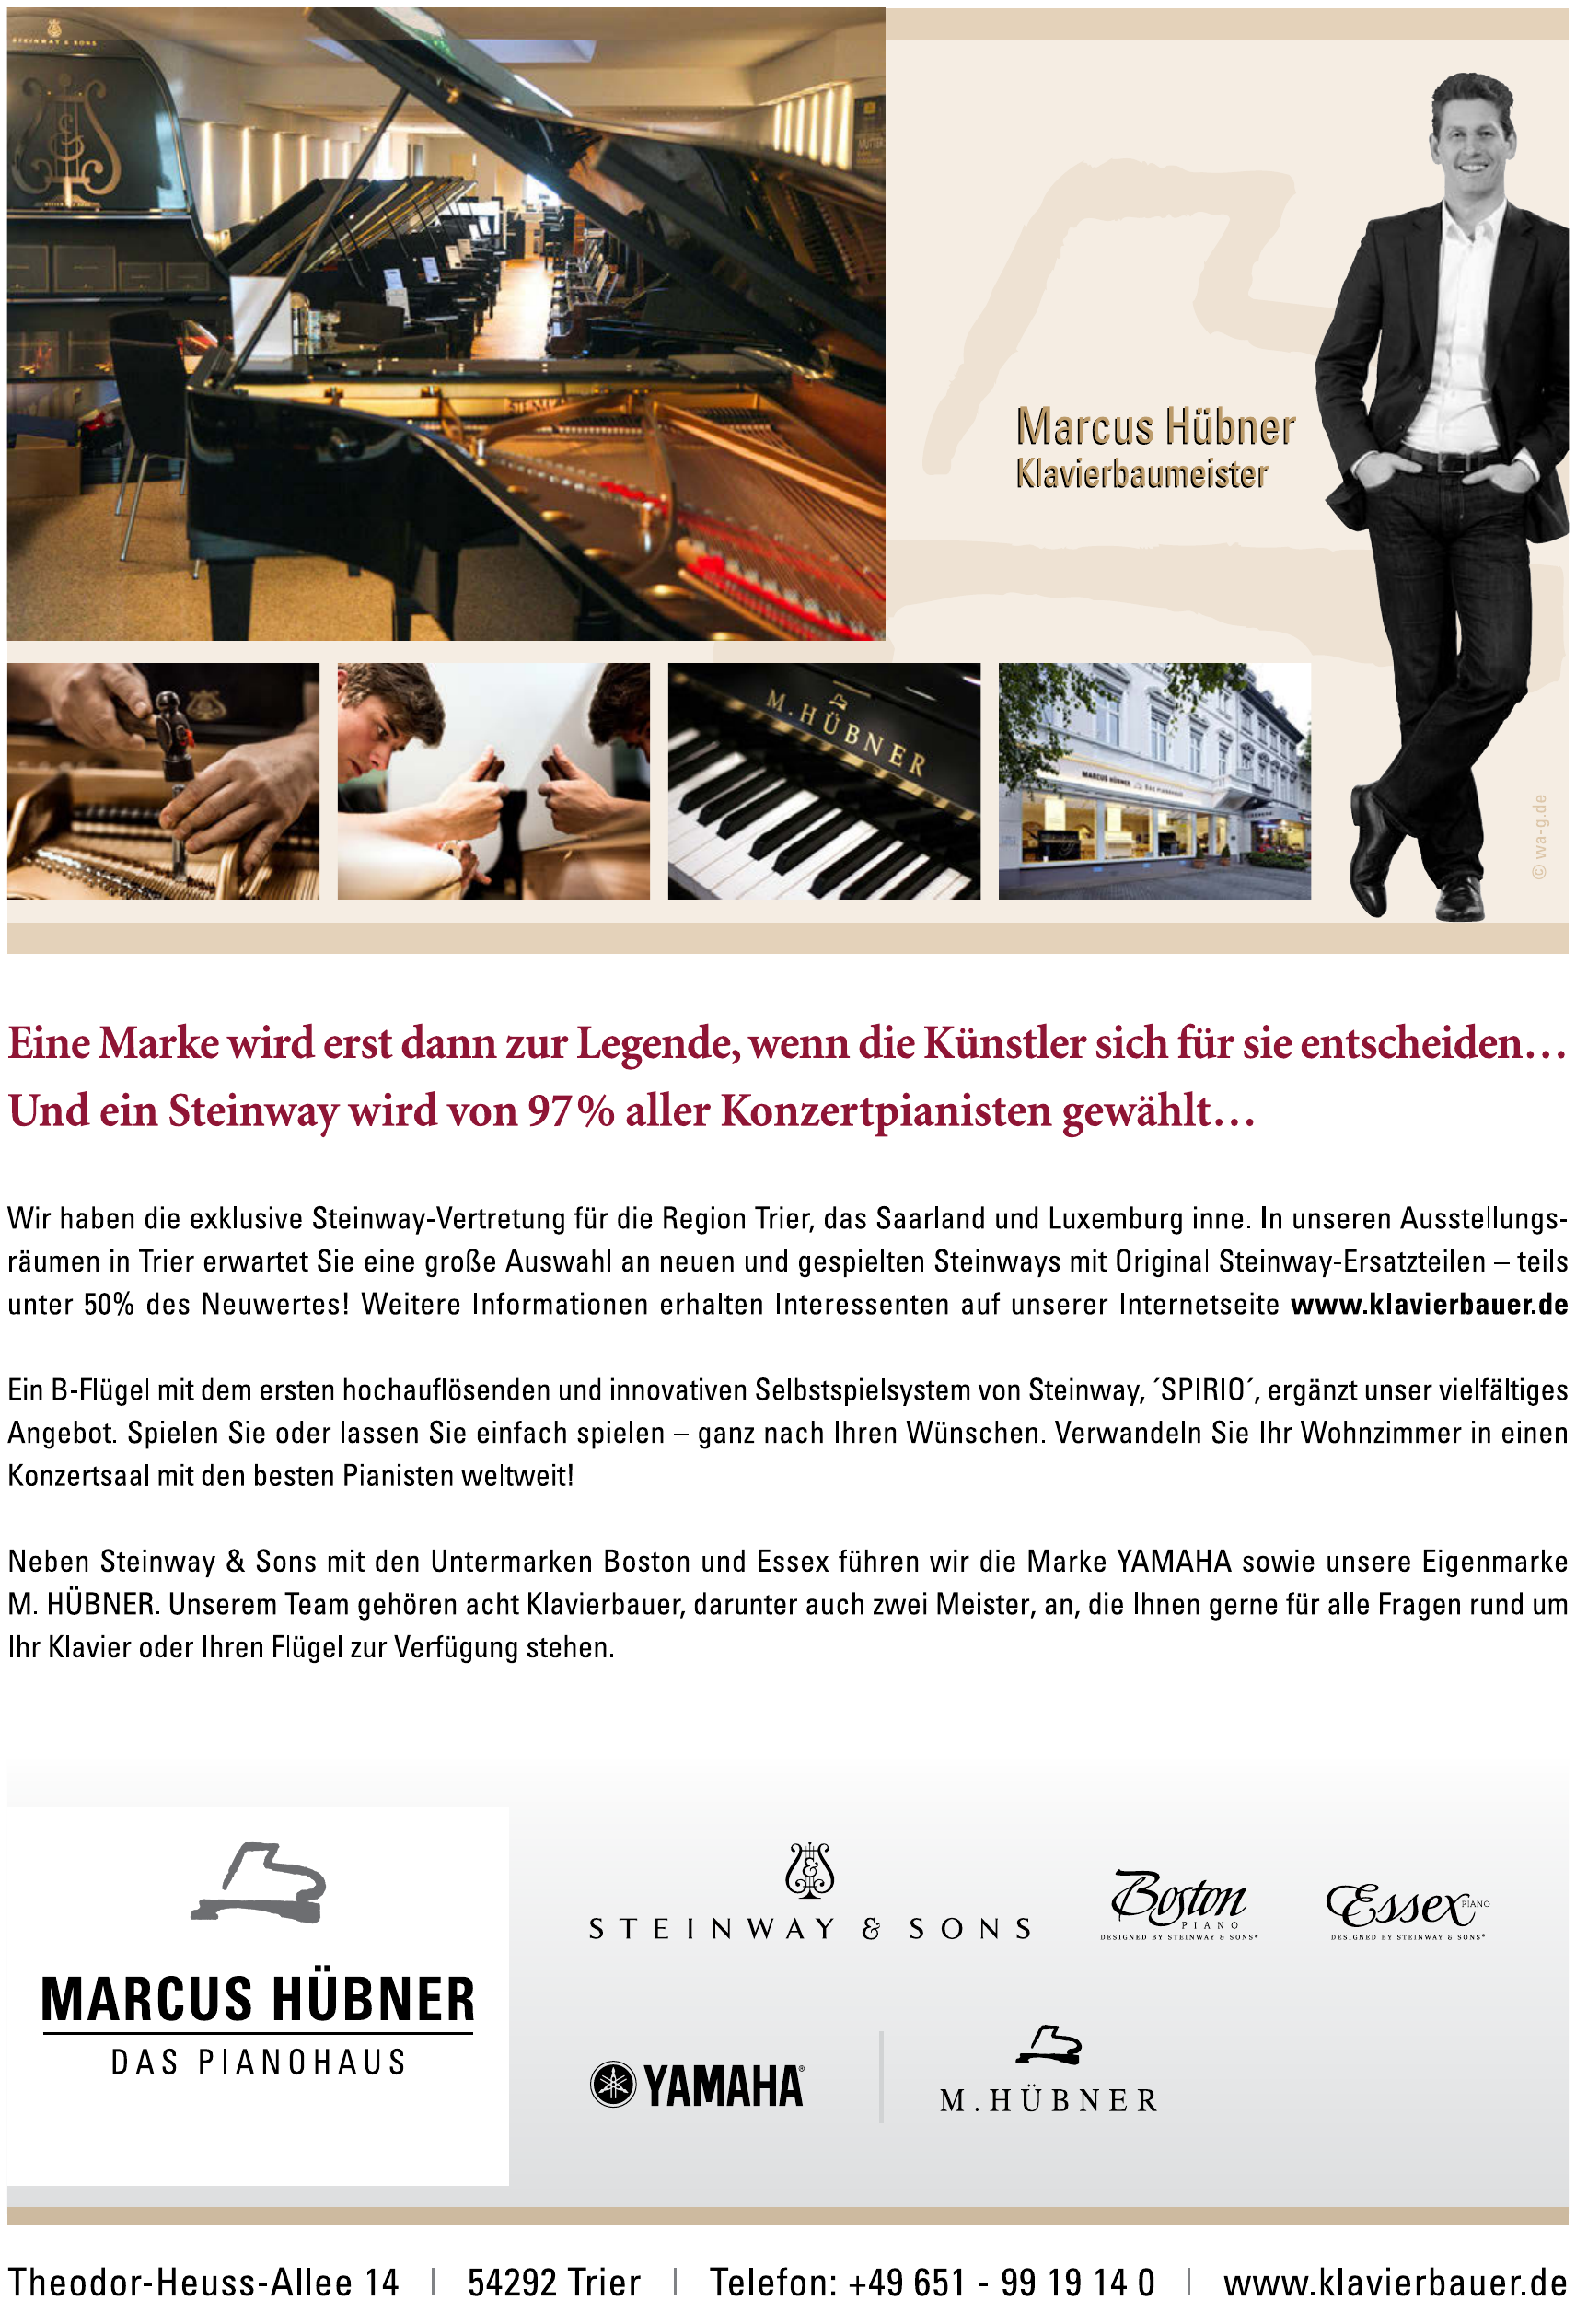 Pianohaus Marcus Hübner